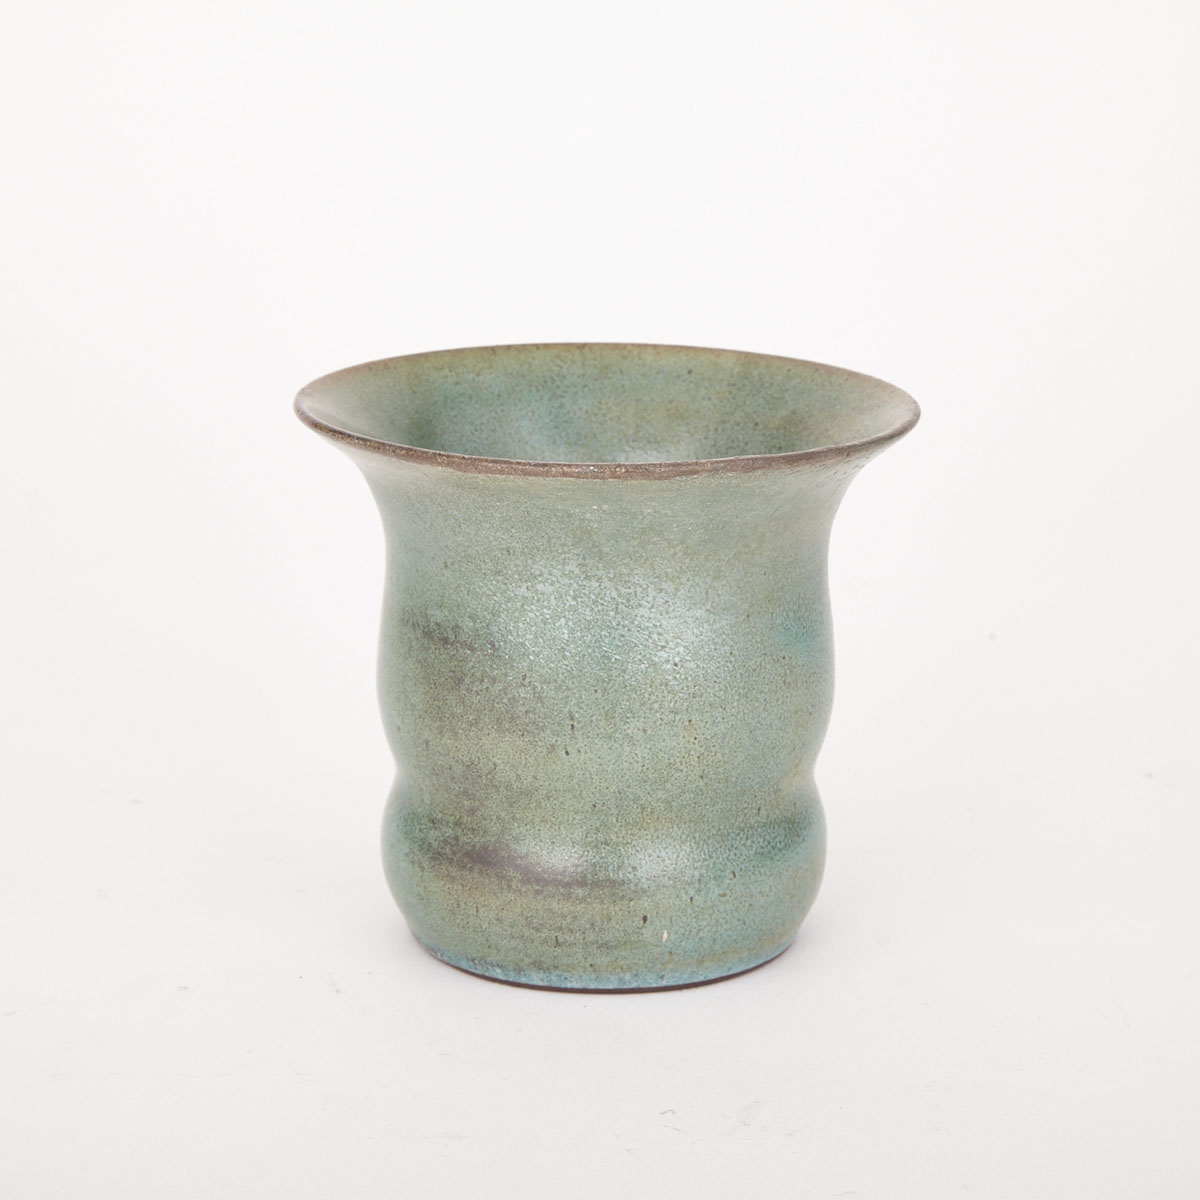 Deichmann Mottled Green Glazed Vase, Kjeld & Erica Deichmann, mid-20th century 